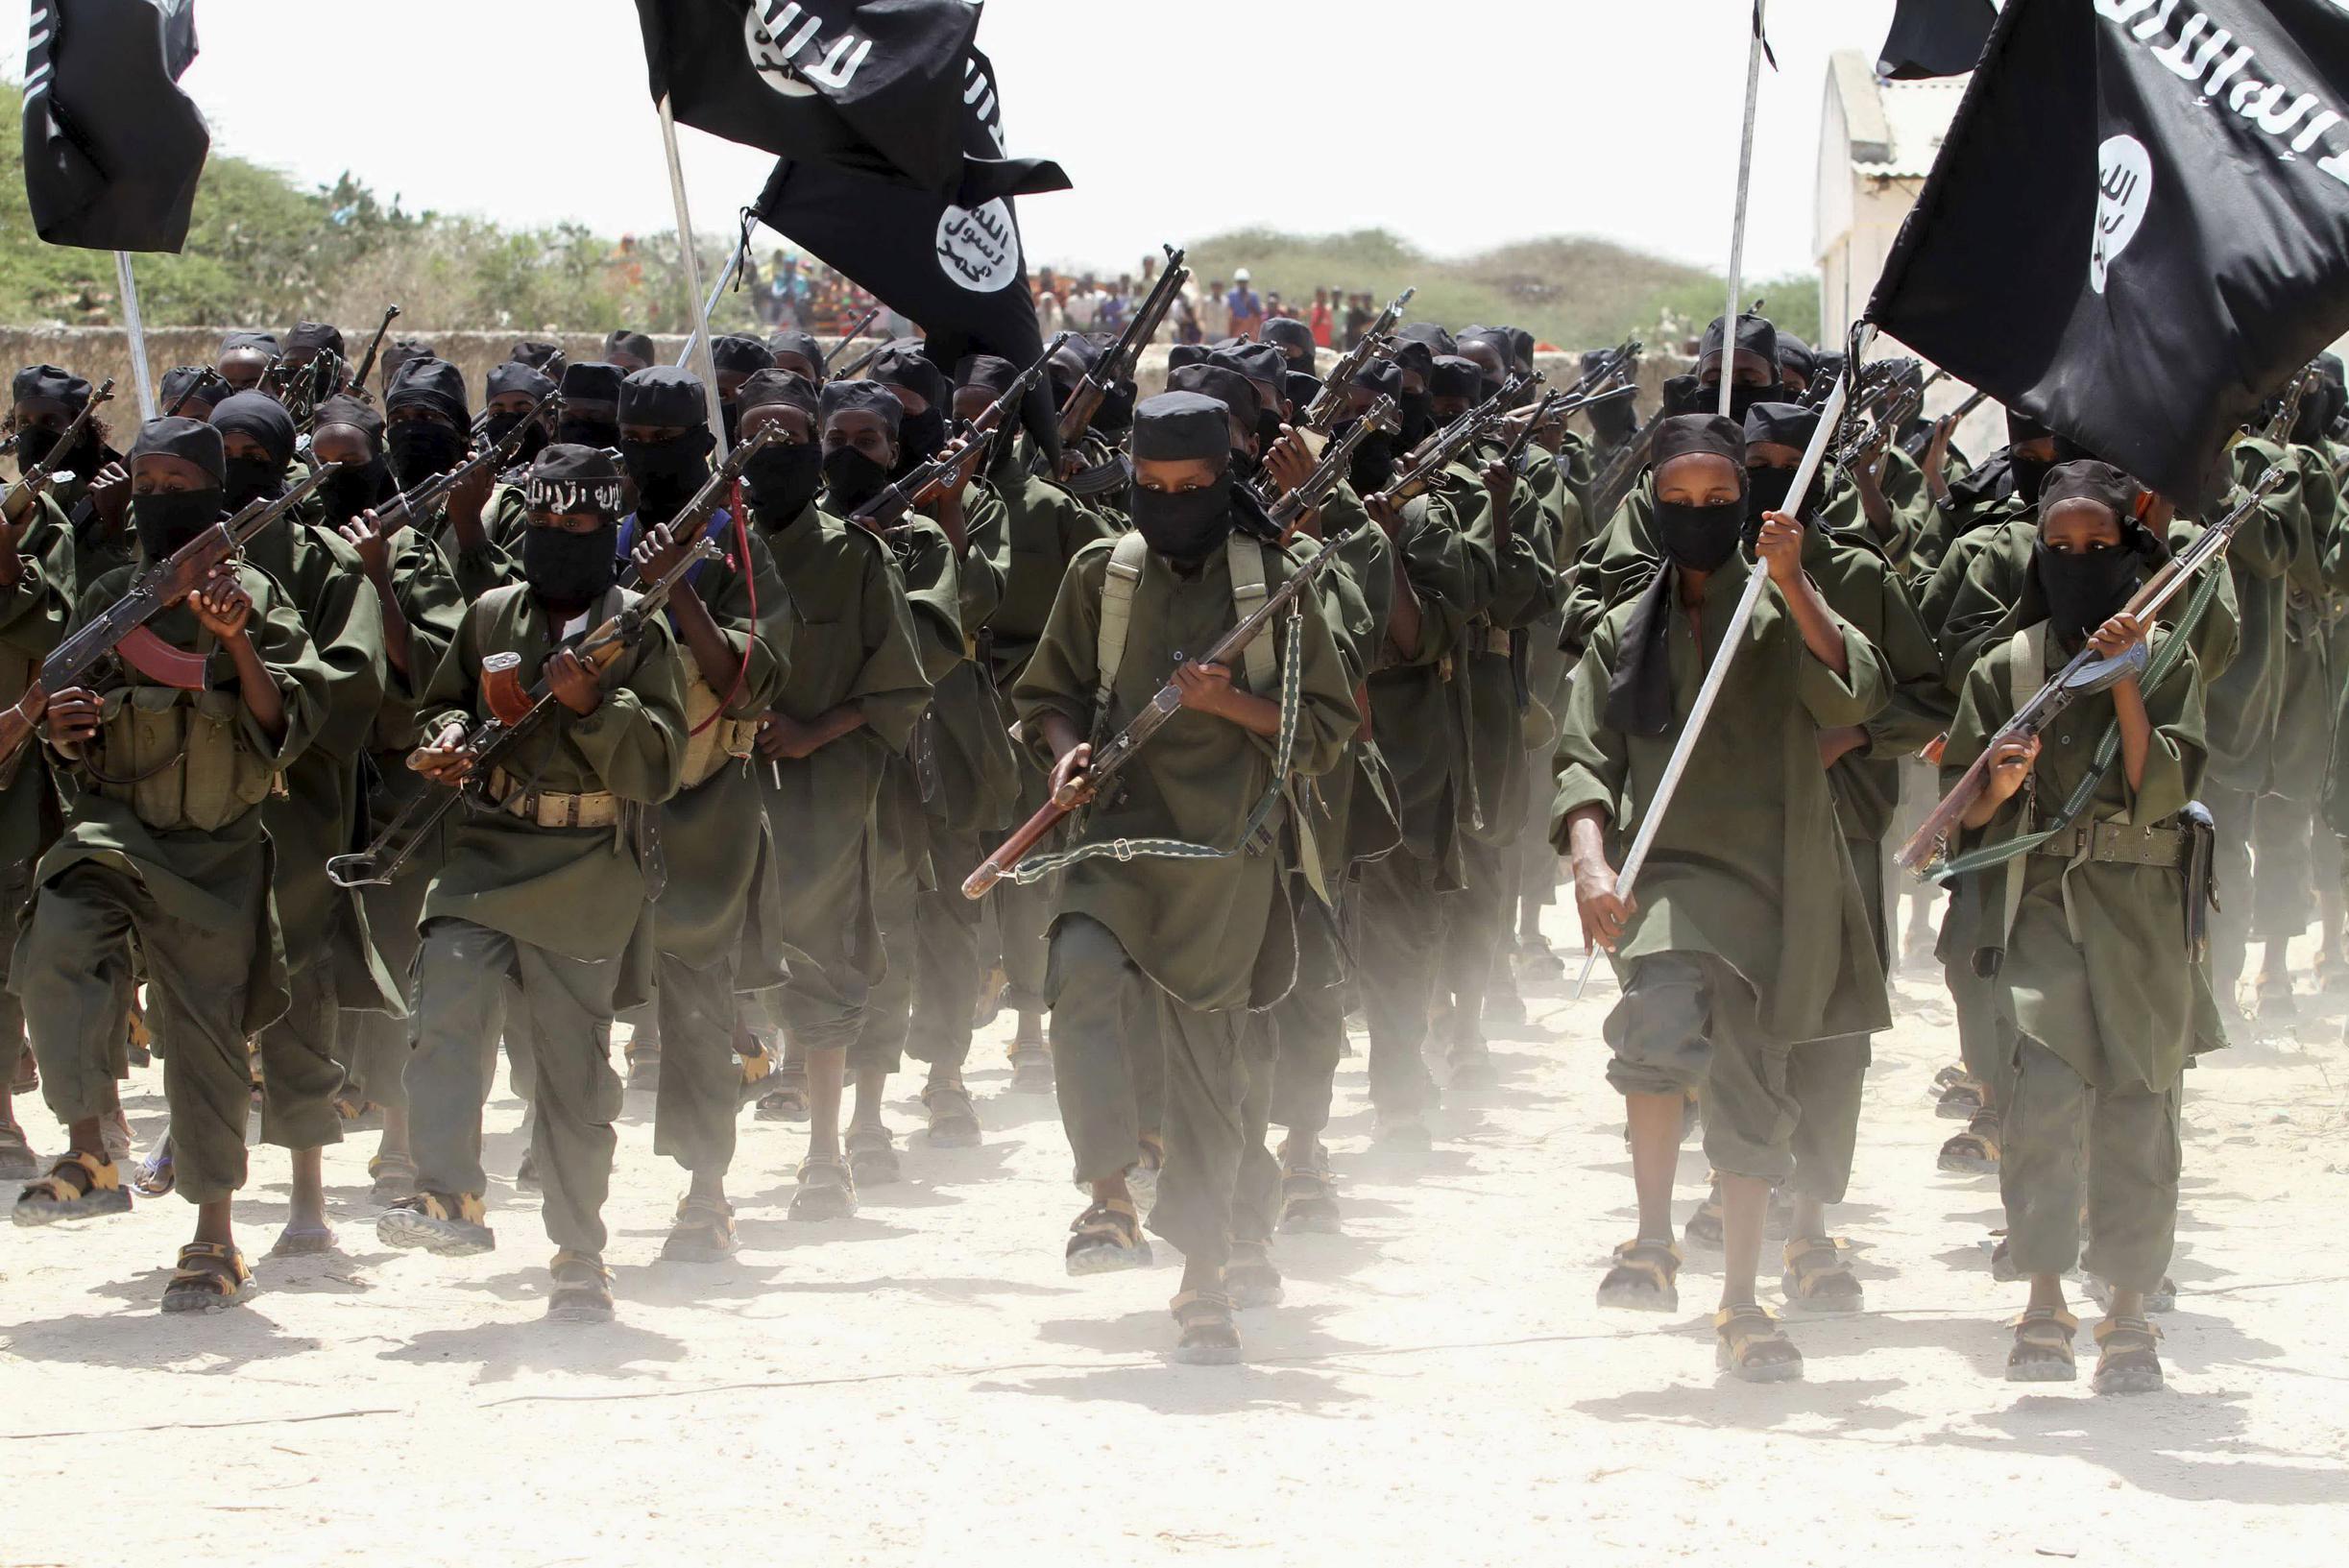 Islamist terror group executes seven people in Somalia